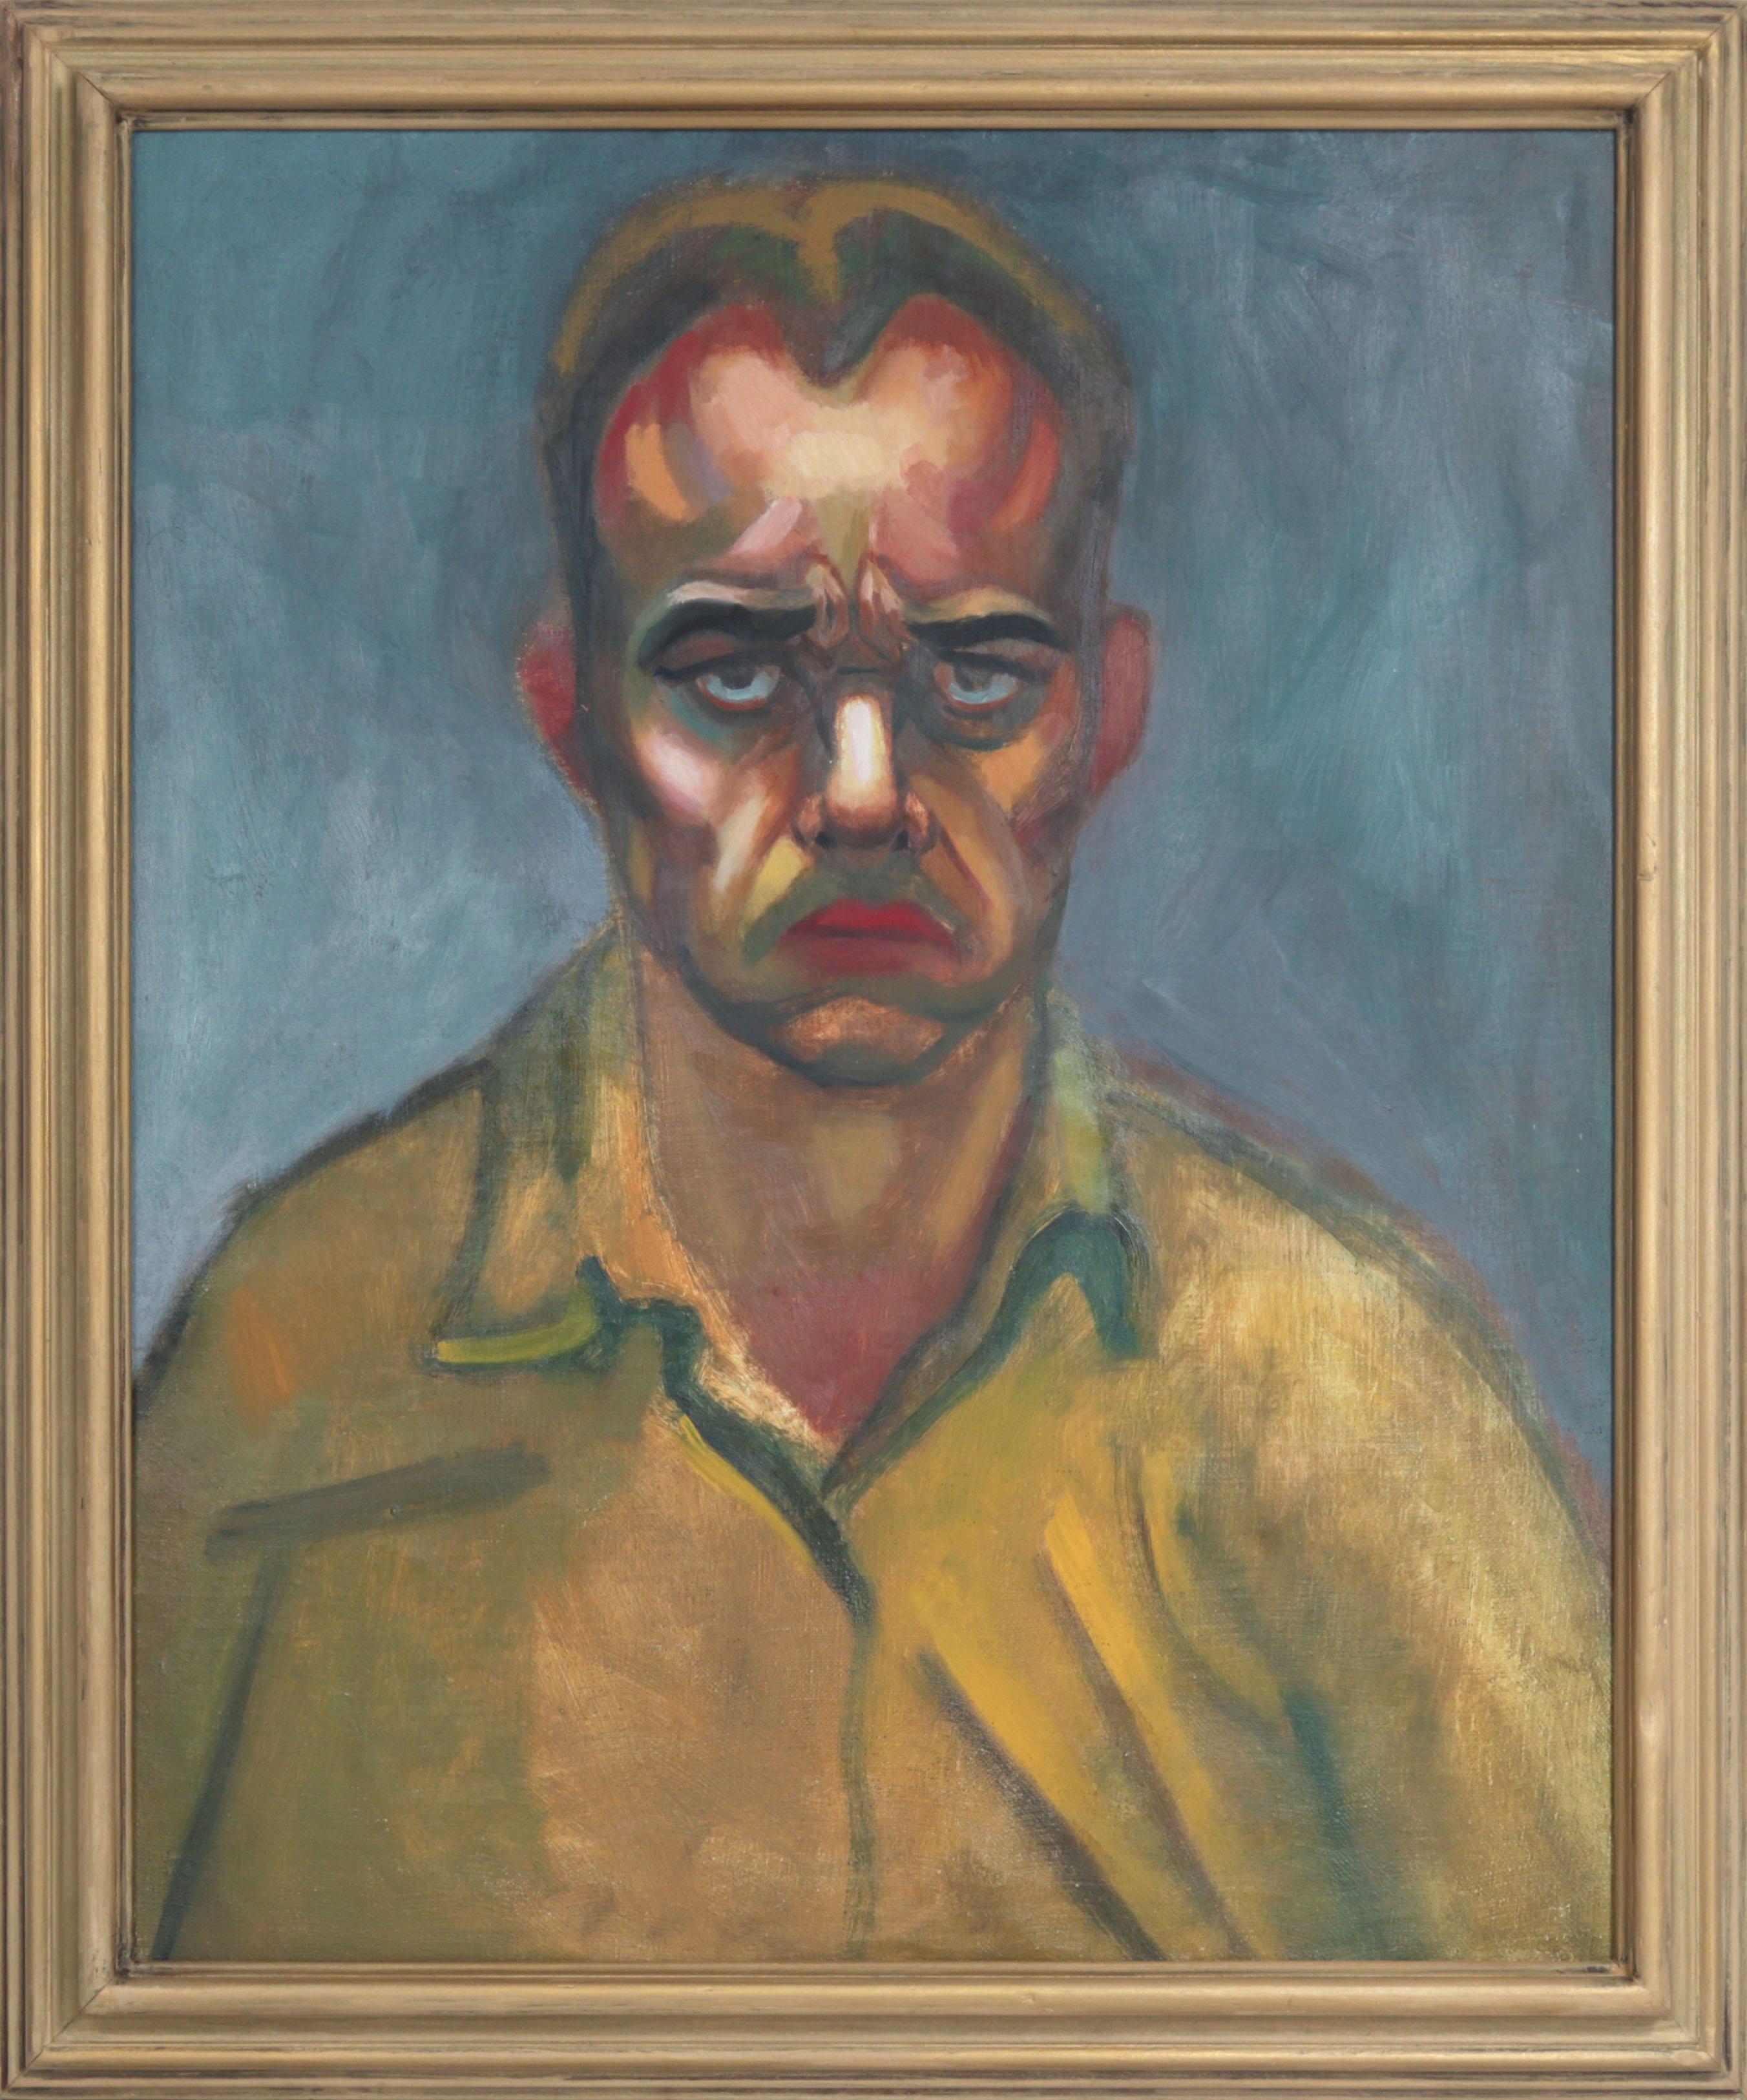 Martin Snipper Portrait Painting - Artist Self Portrait 1940s Oil Painting